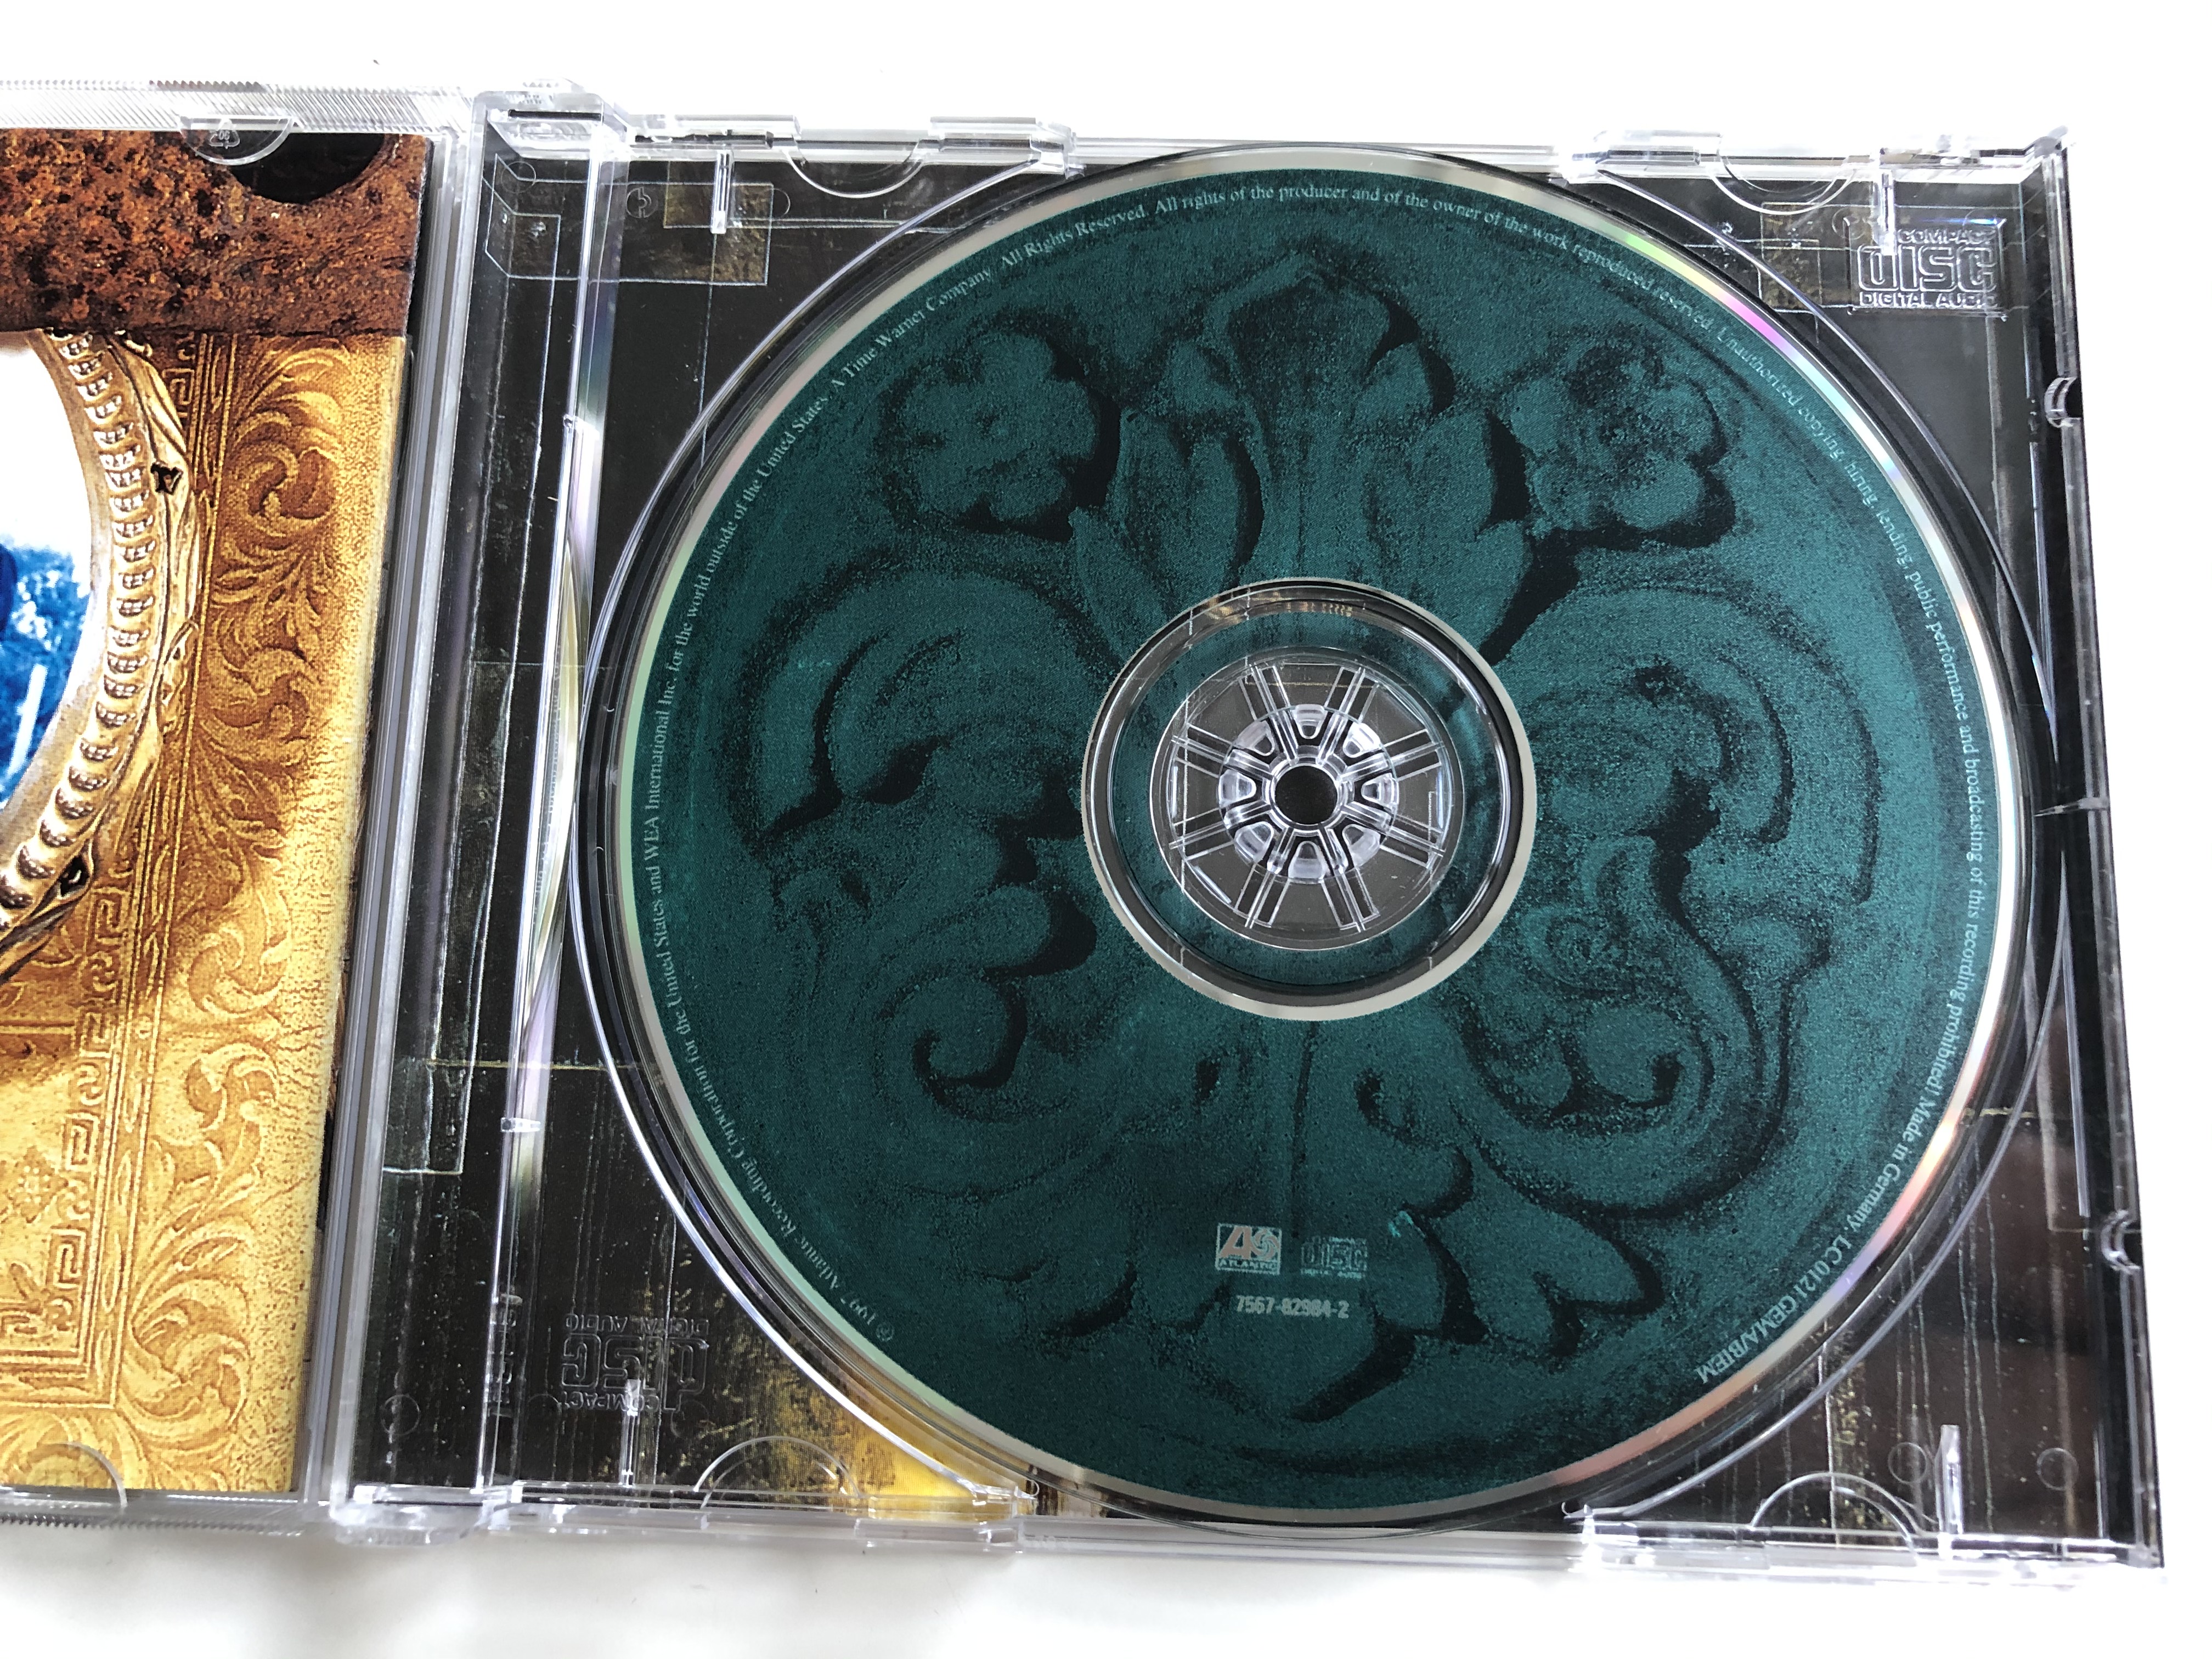 collective-soul-disciplined-breakdown-atlantic-audio-cd-1997-7567-82984-2-9-.jpg